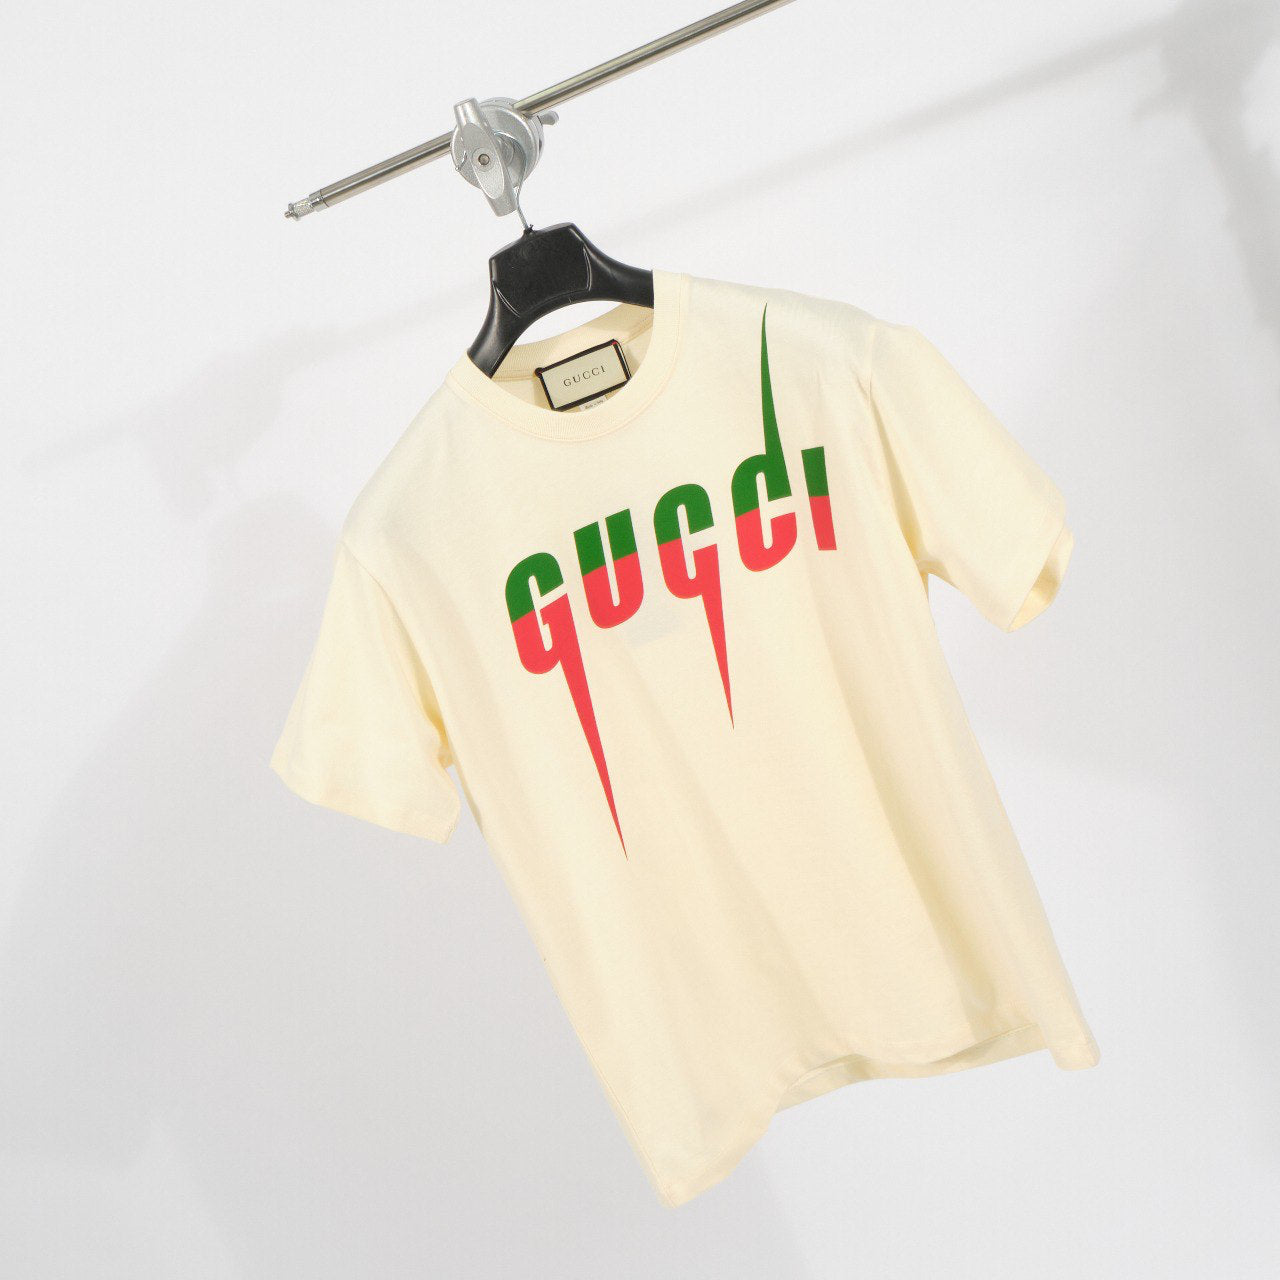 Gucci Blade print T-shirt White